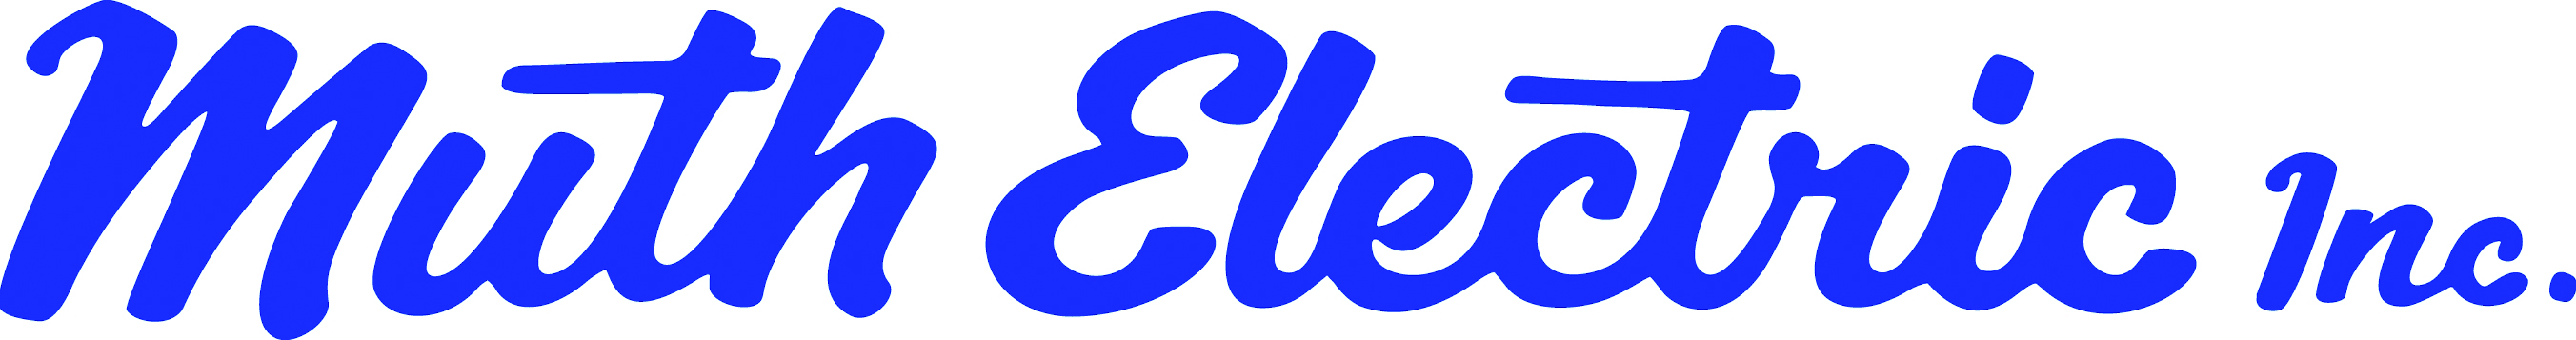 Muth electric logo